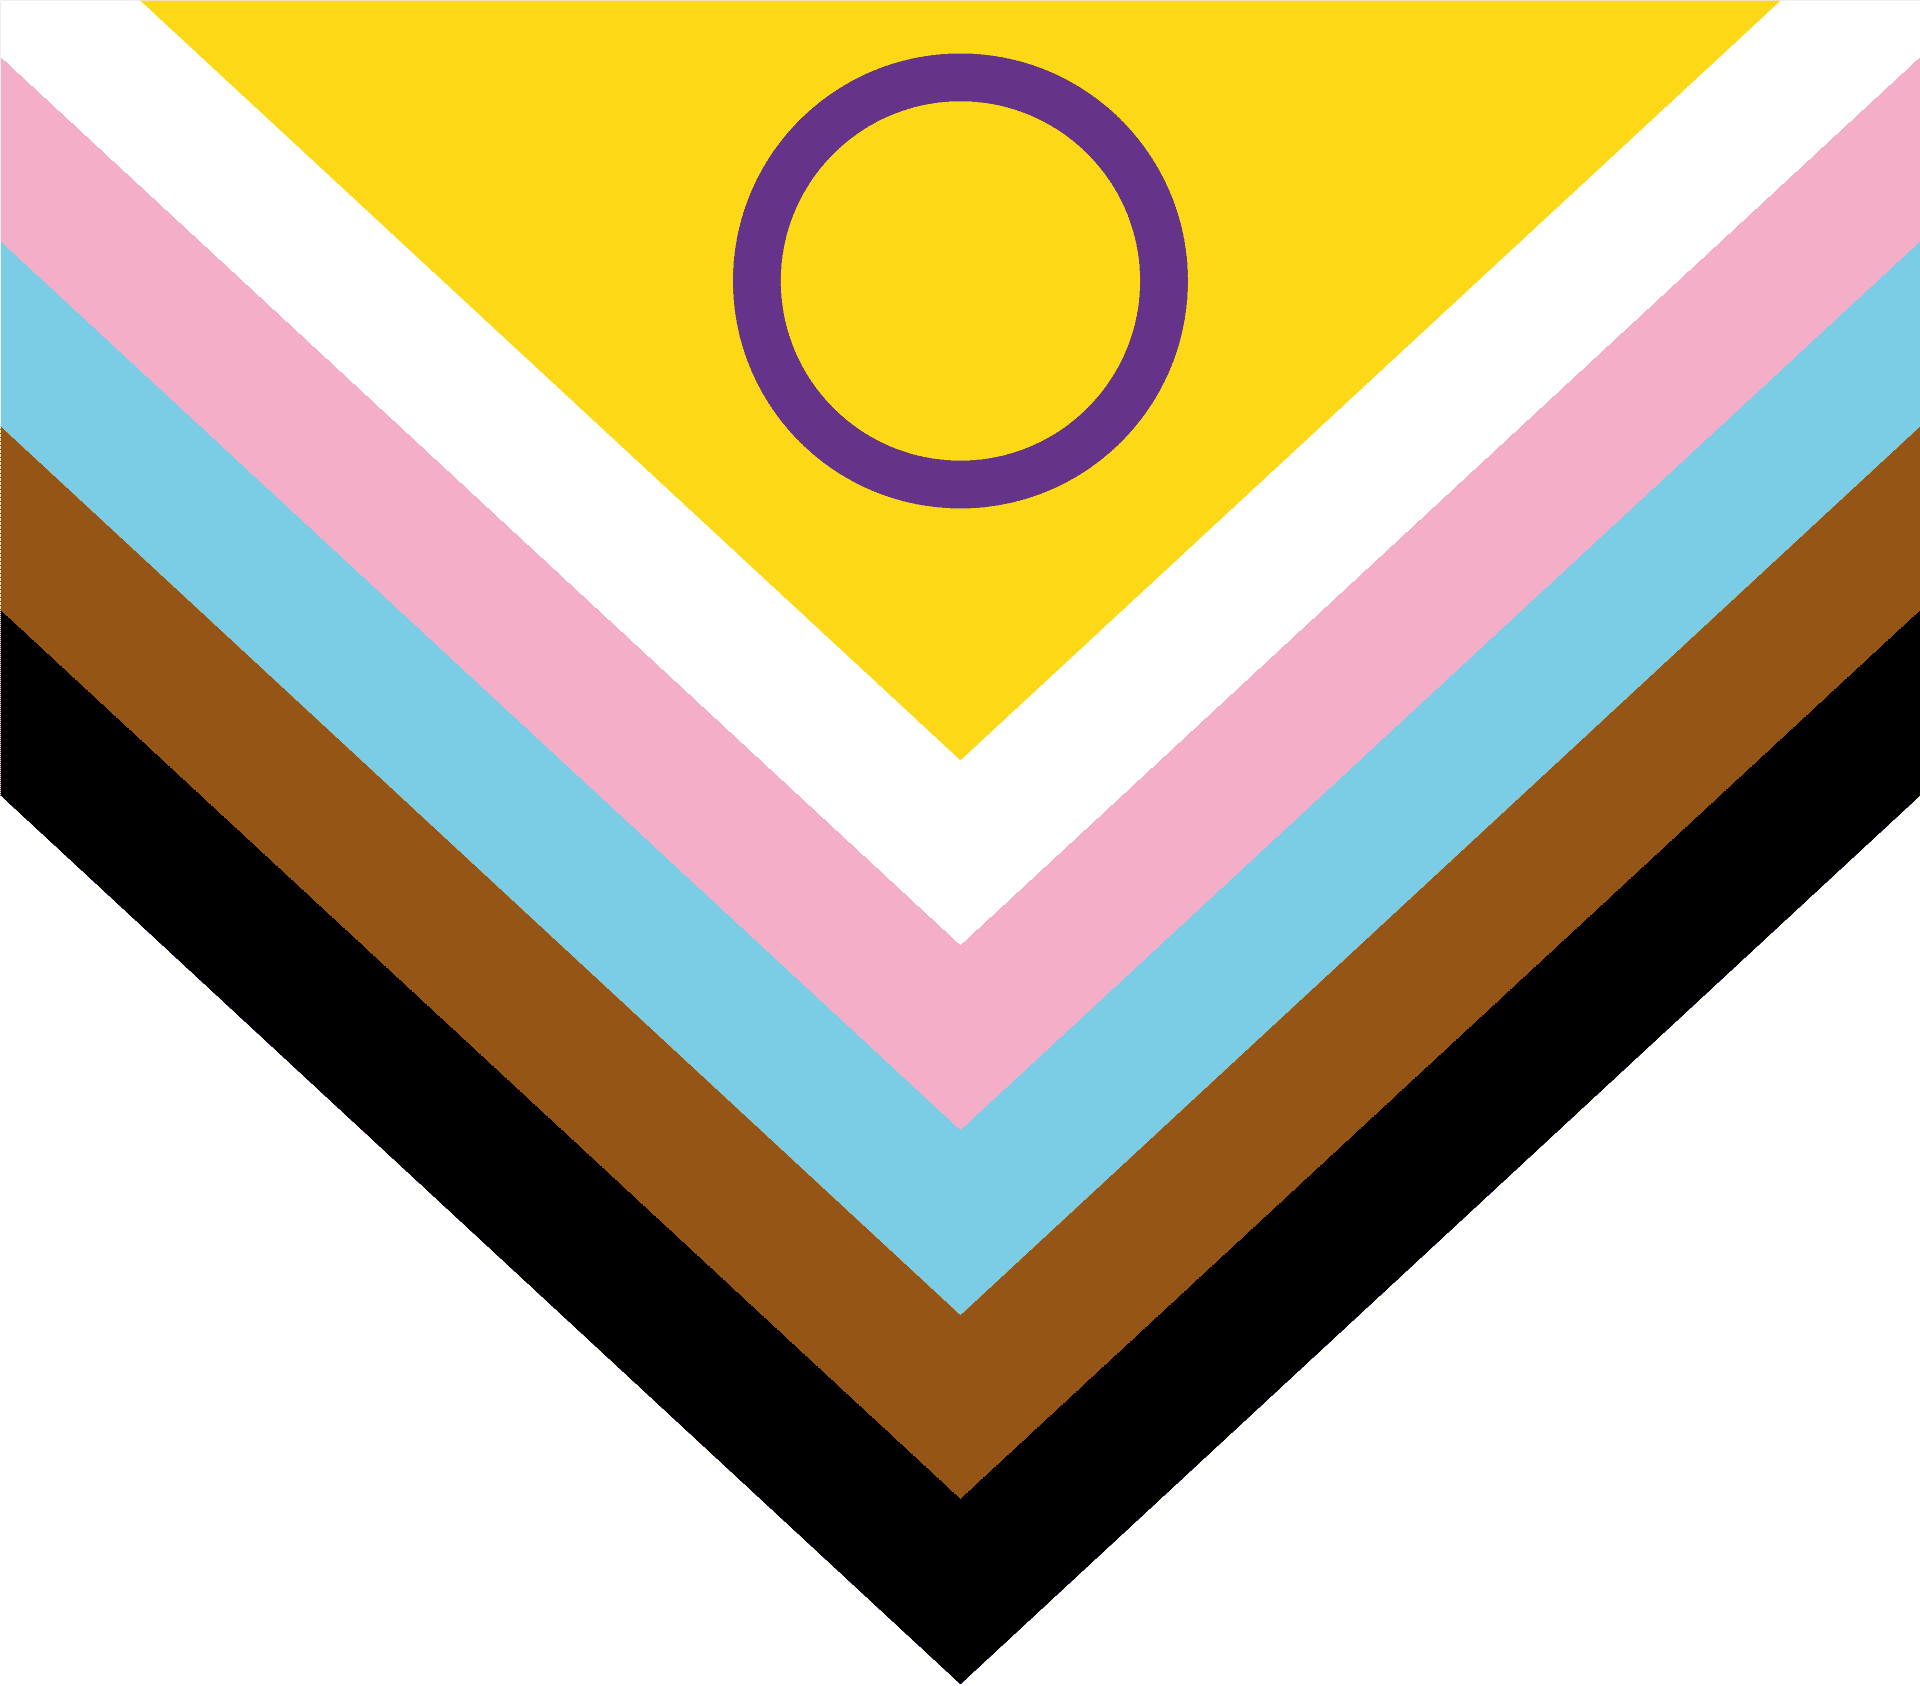 triangular wedge part of the intersex progress pride flag.